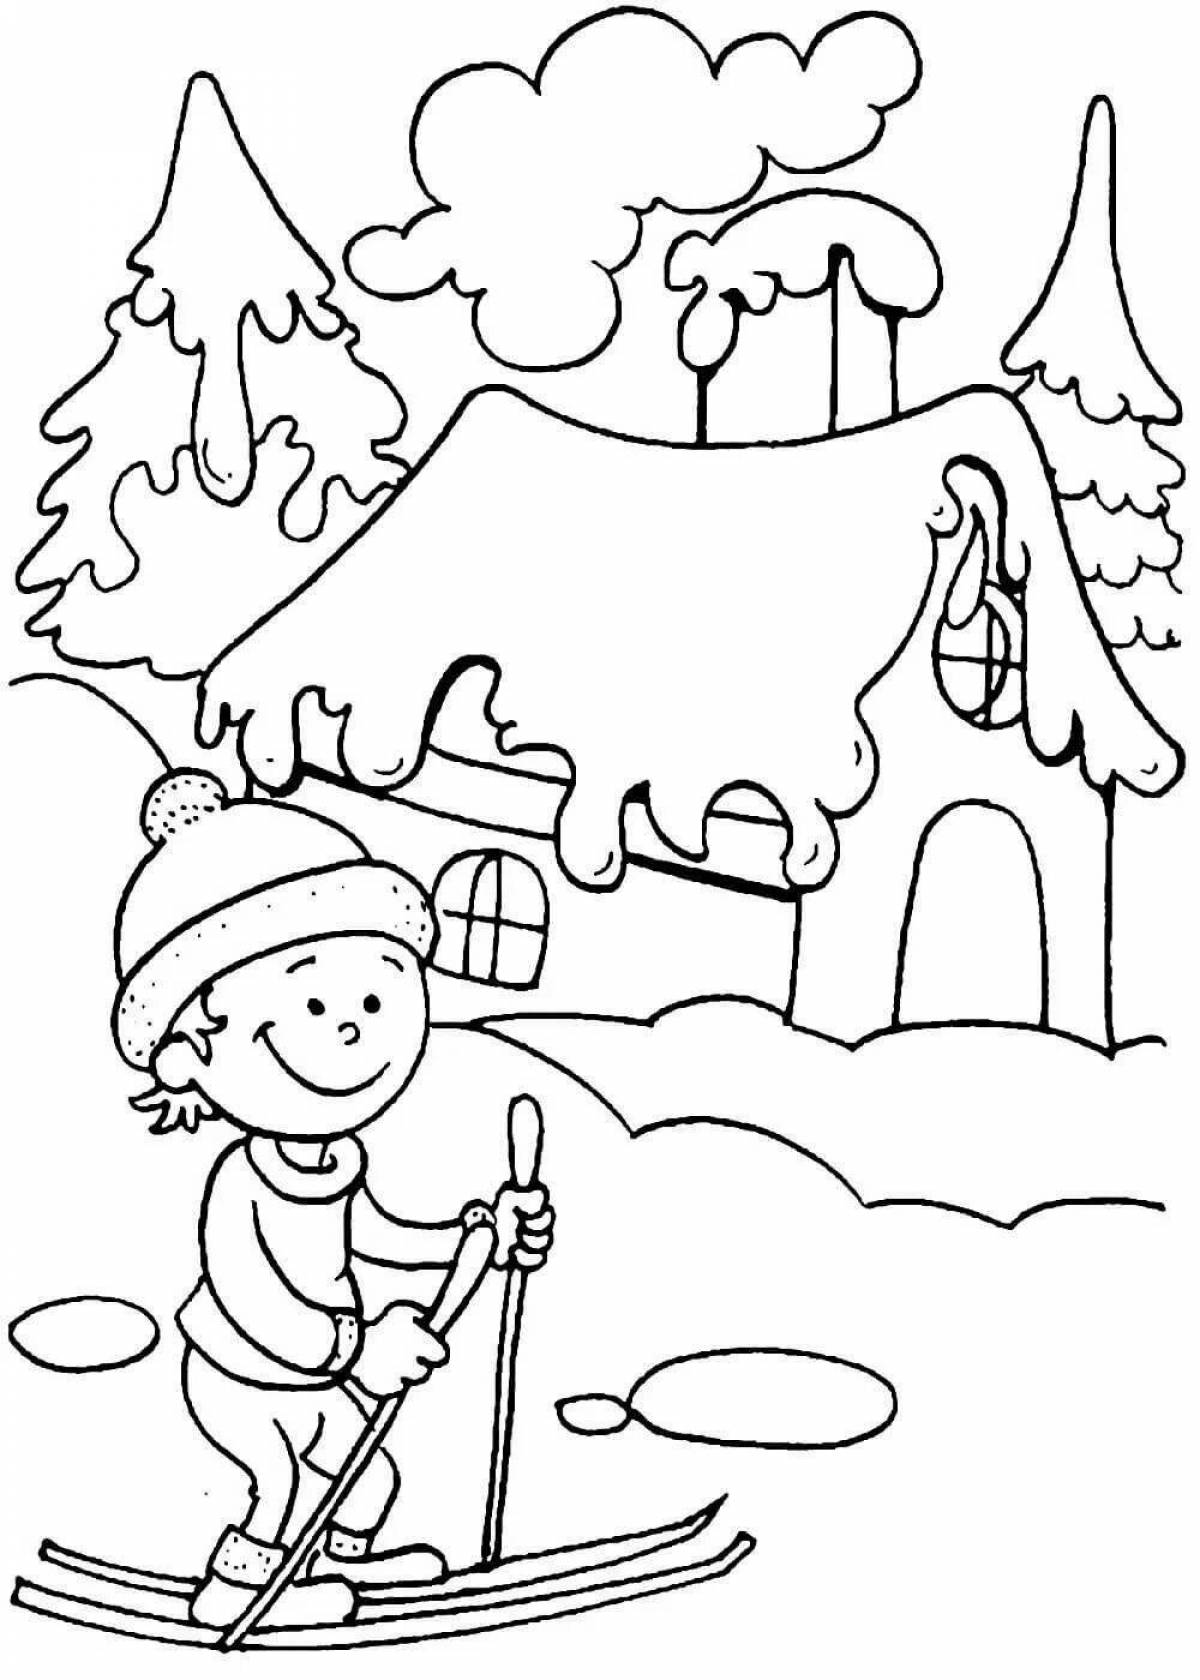 Live winter coloring for preschoolers